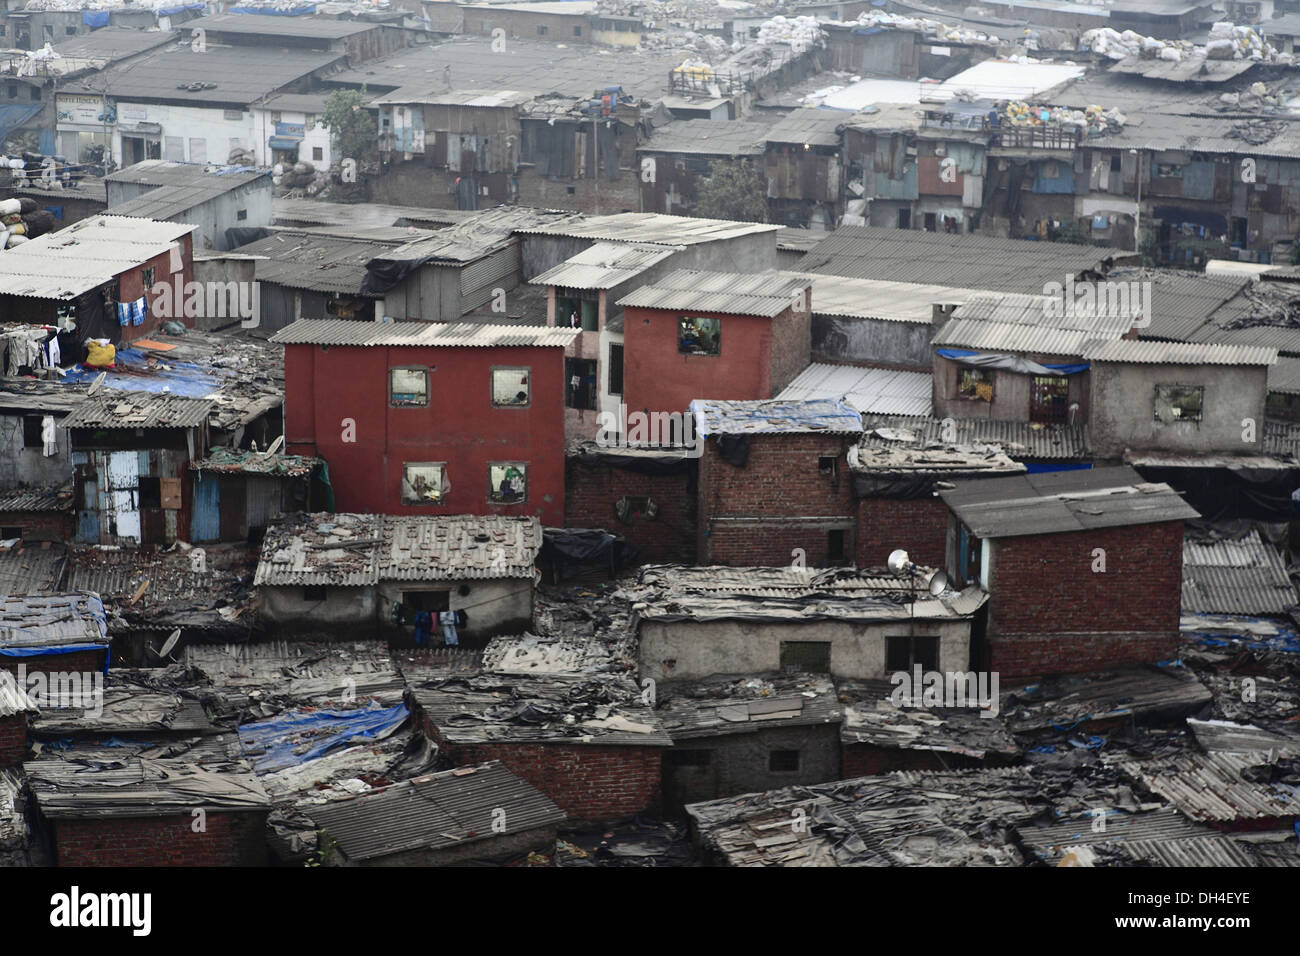 aerial-view-of-slums-dharavi-at-mumbai-india-DH4EYE.jpg